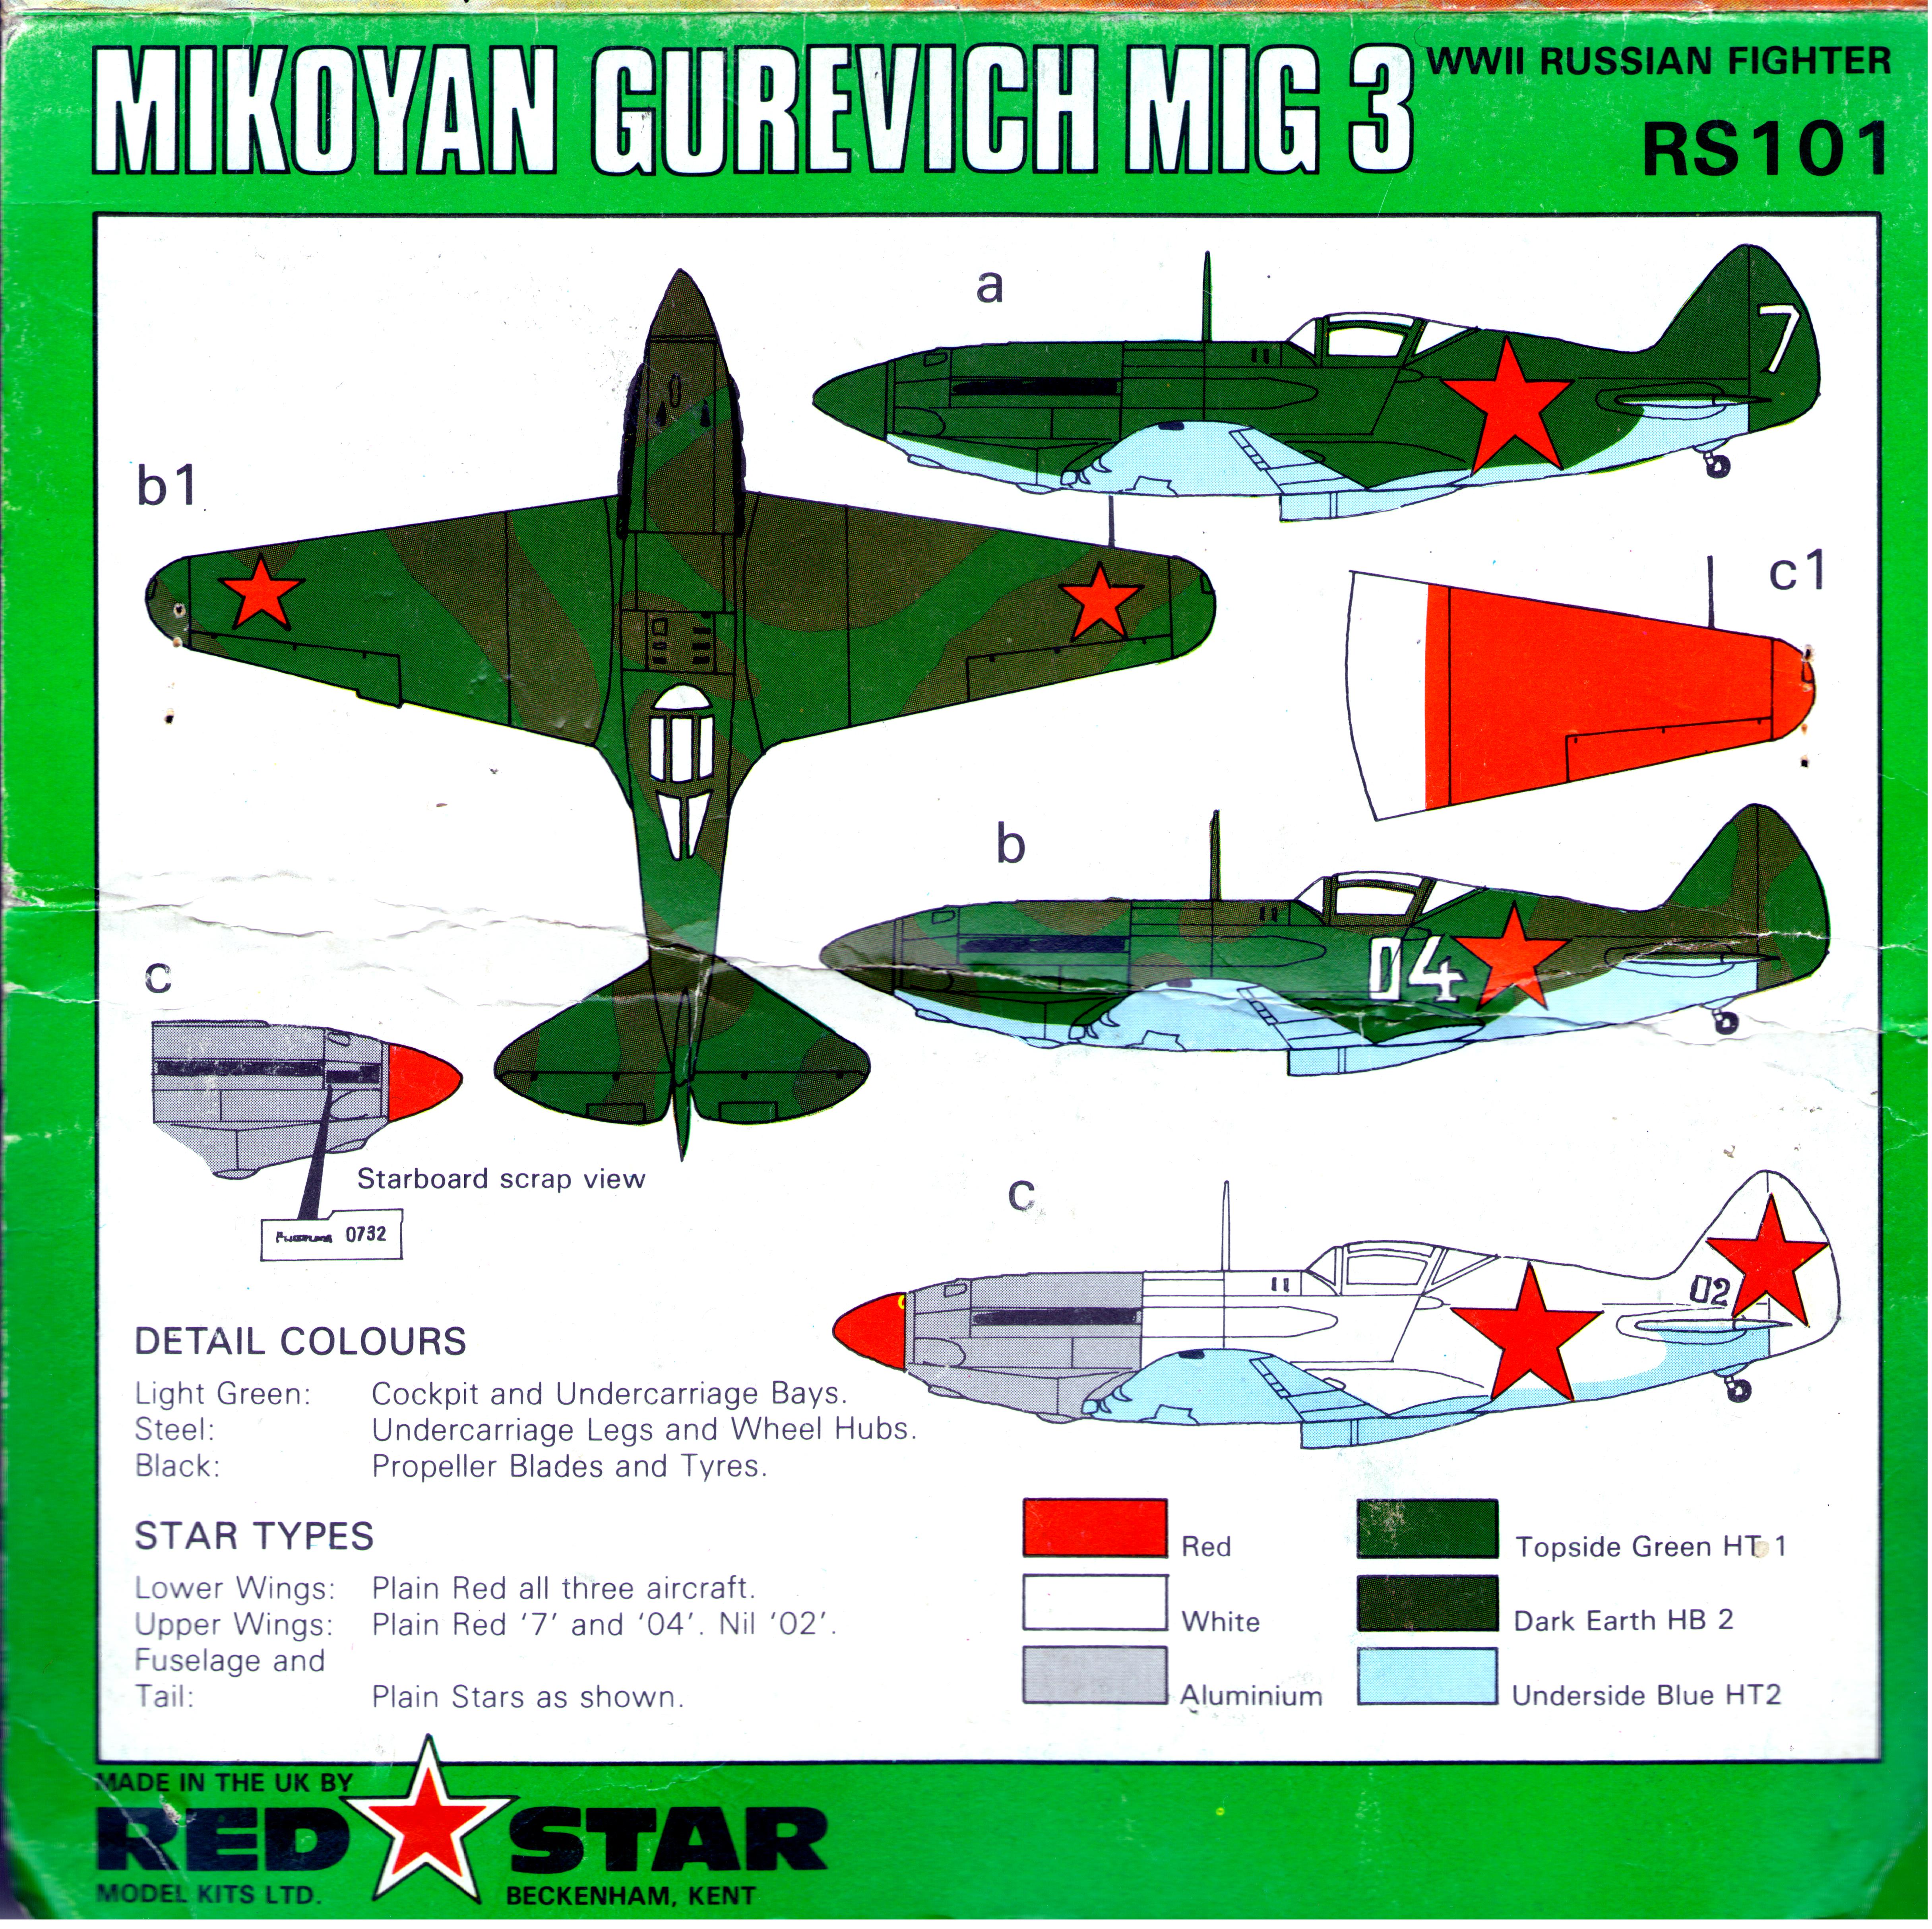 Red Star RS101 Mikoyan and Gurevich MiG-3, Red Star Model Kits Ltd, 1984 цветная схема окраски и маркировки